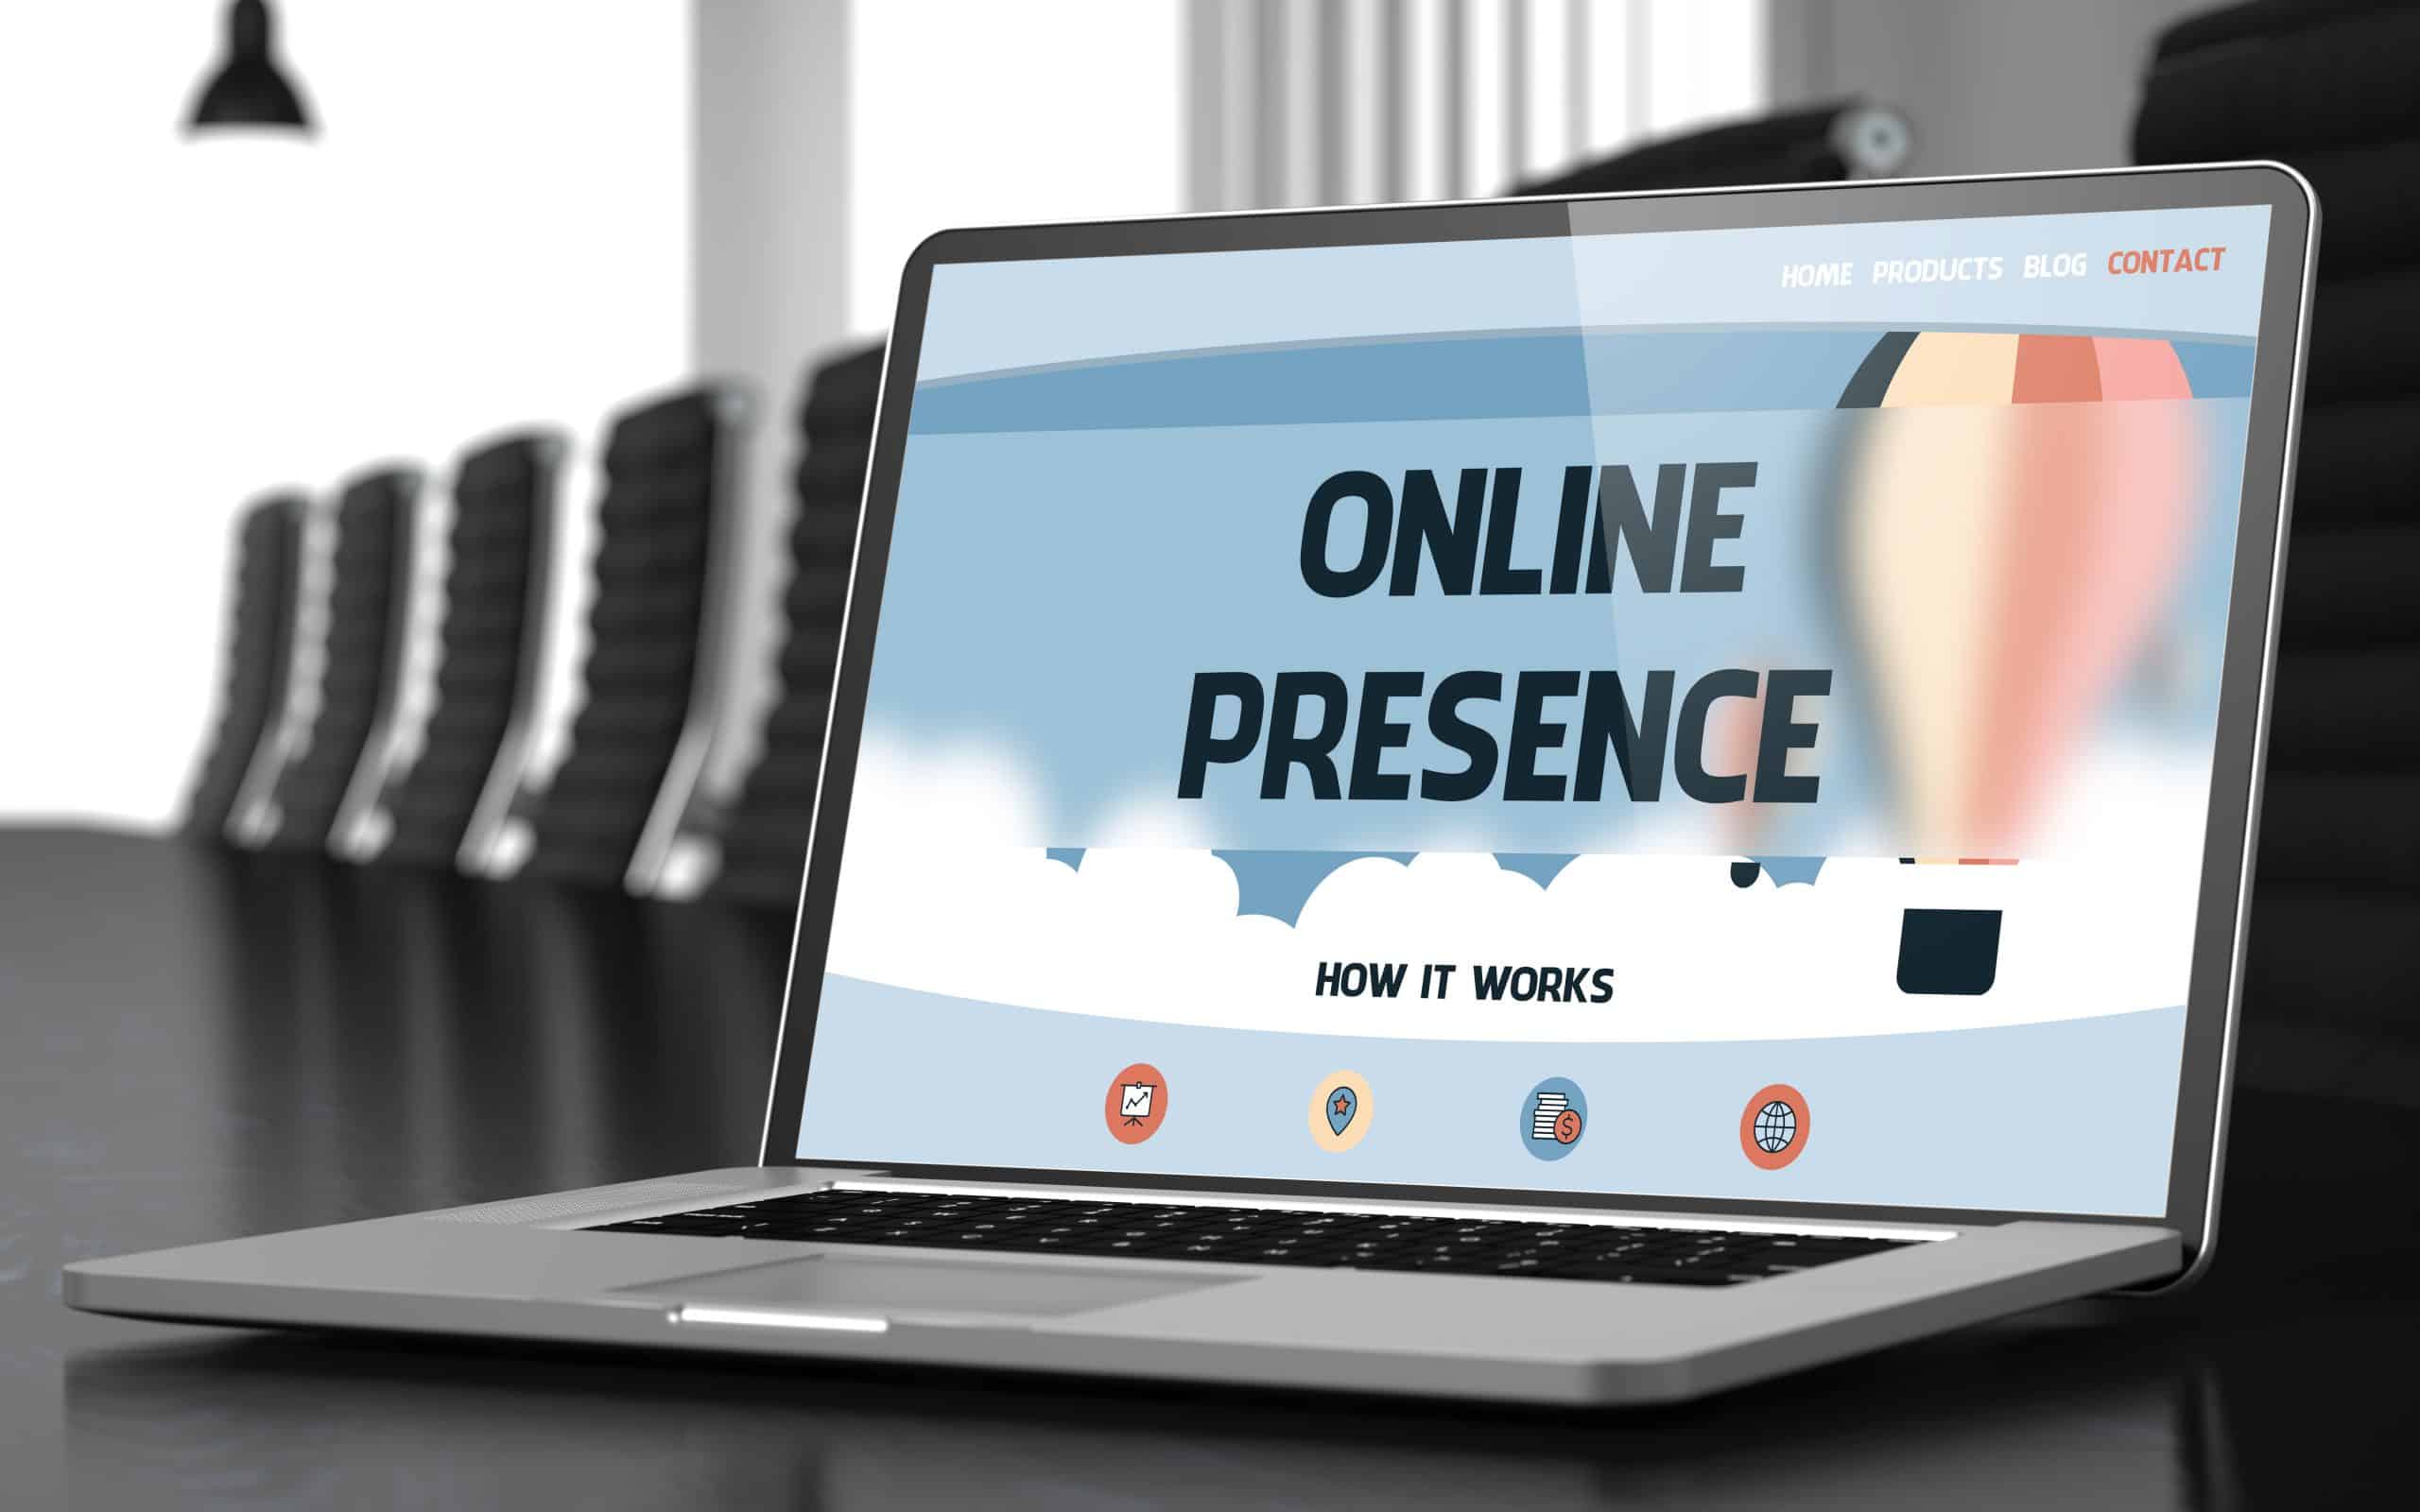 Online presence illustration on laptop